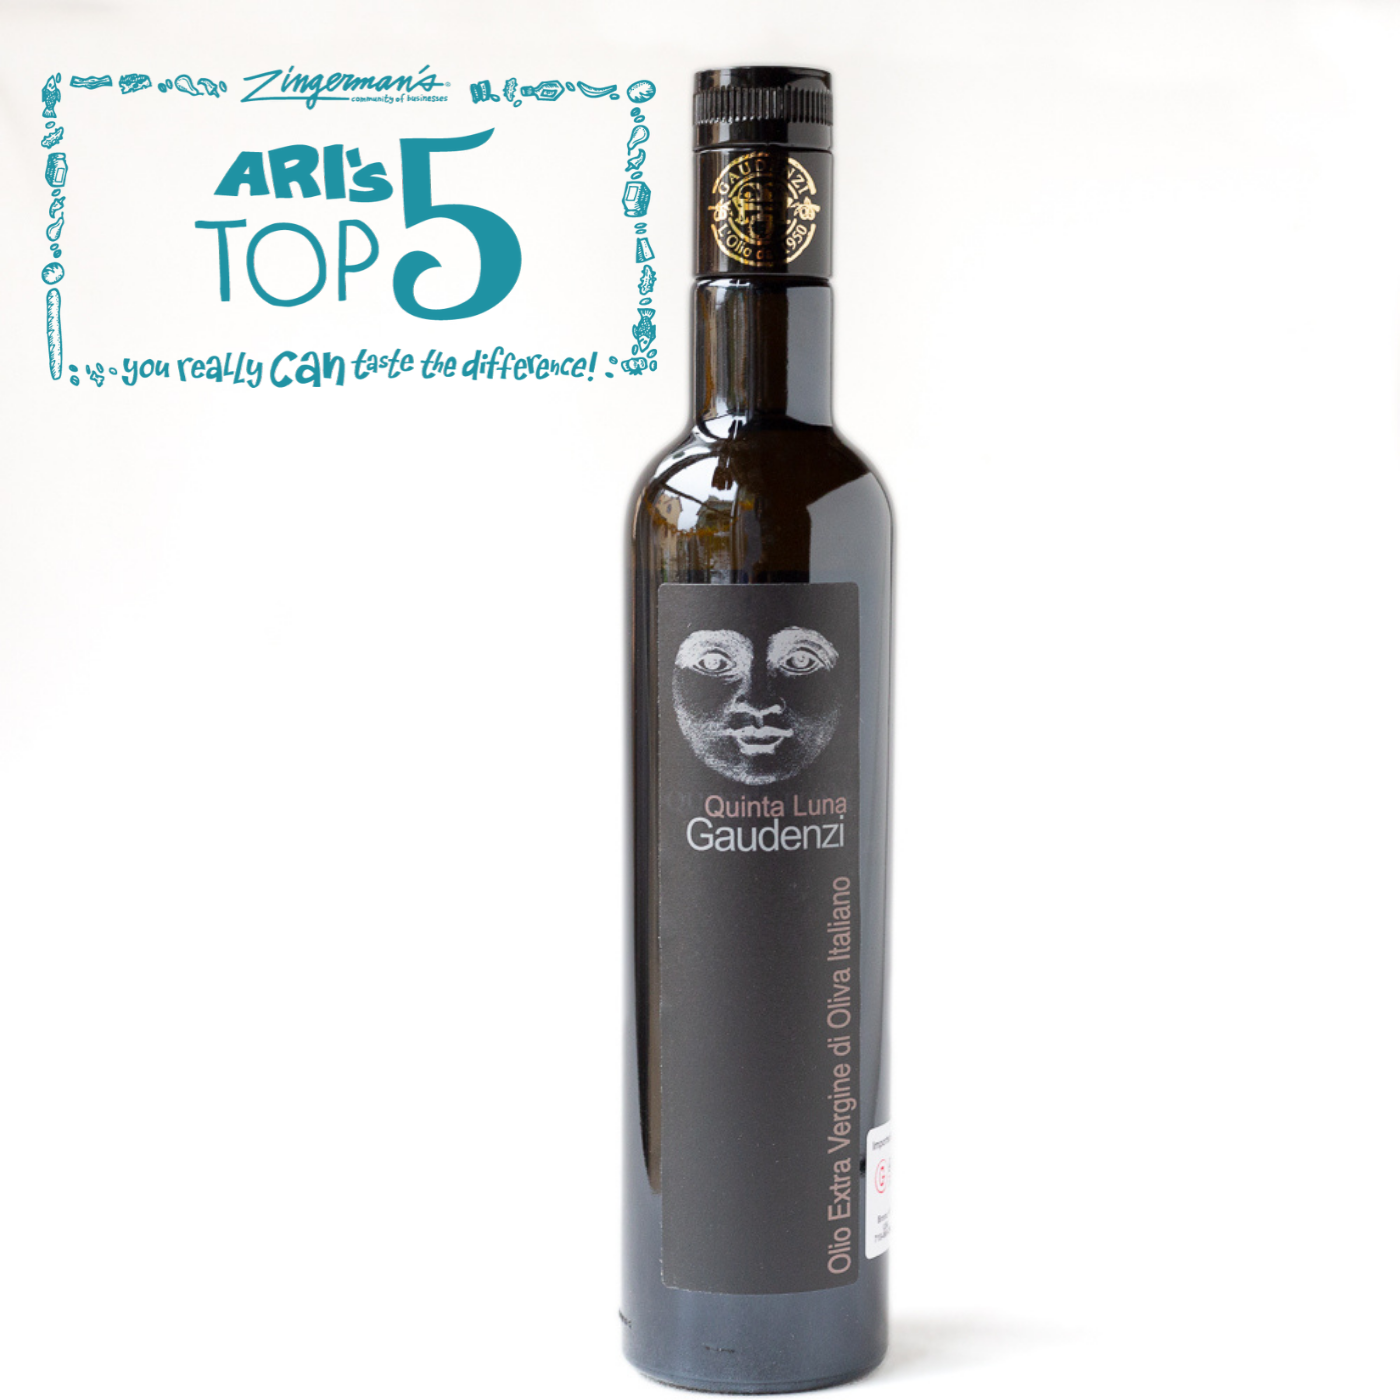 Zingerman's loves Quinta Luna extra virgin olive oil from Umbria